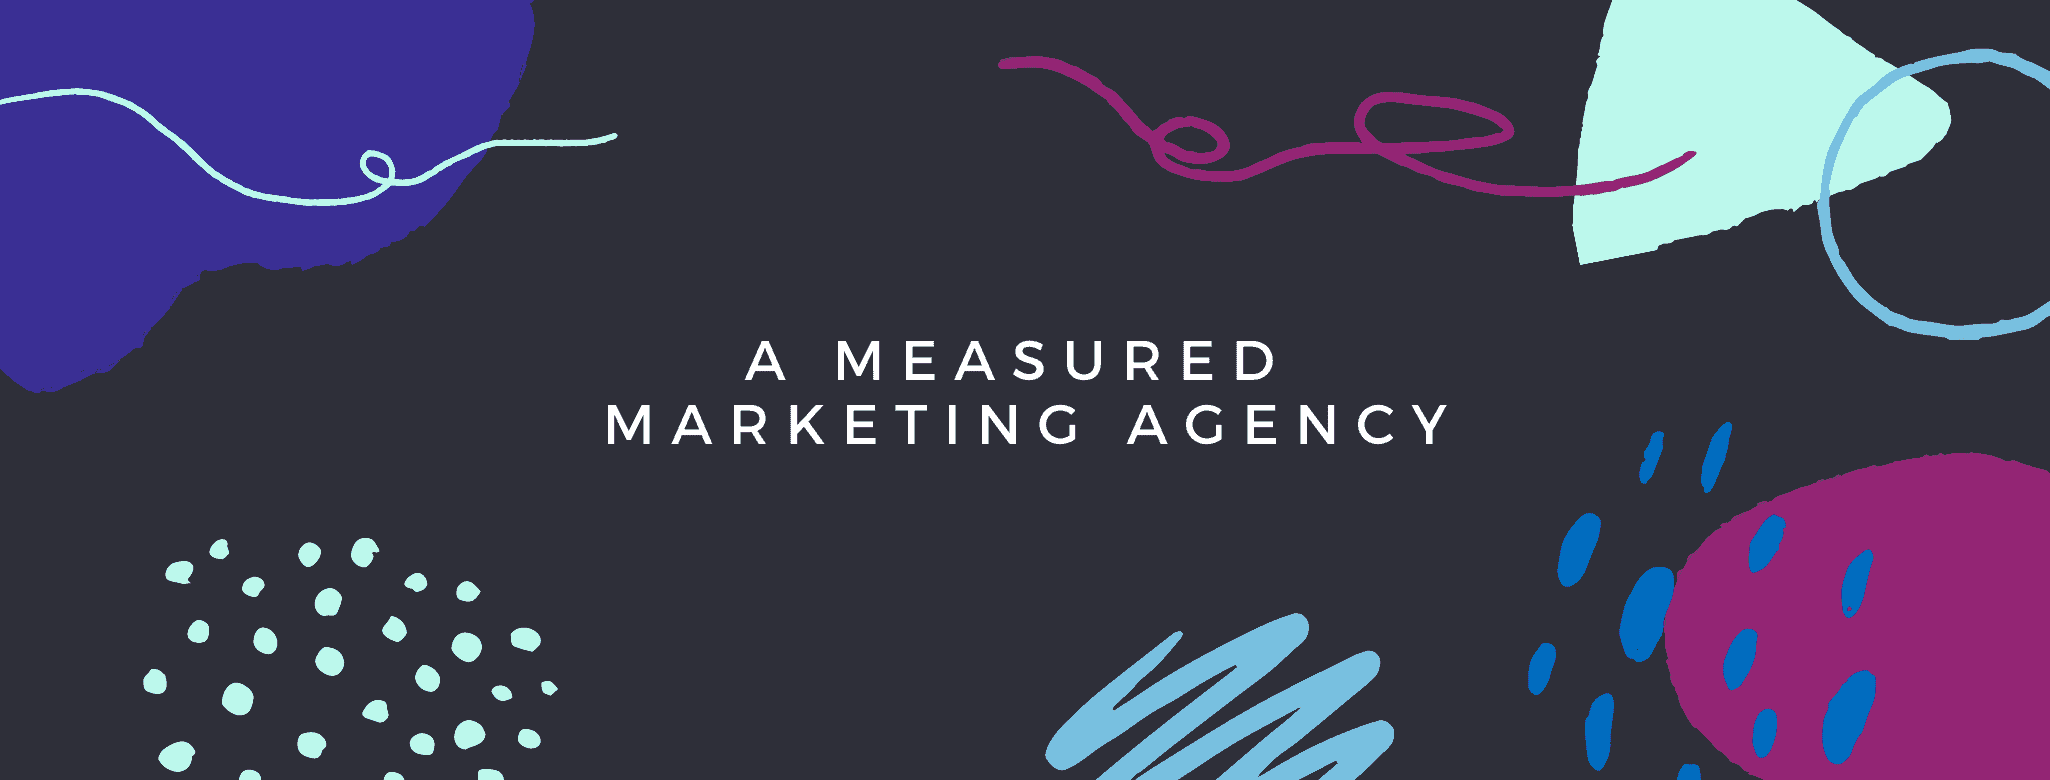 Sapphire Strategy - Measure Marketing Agency